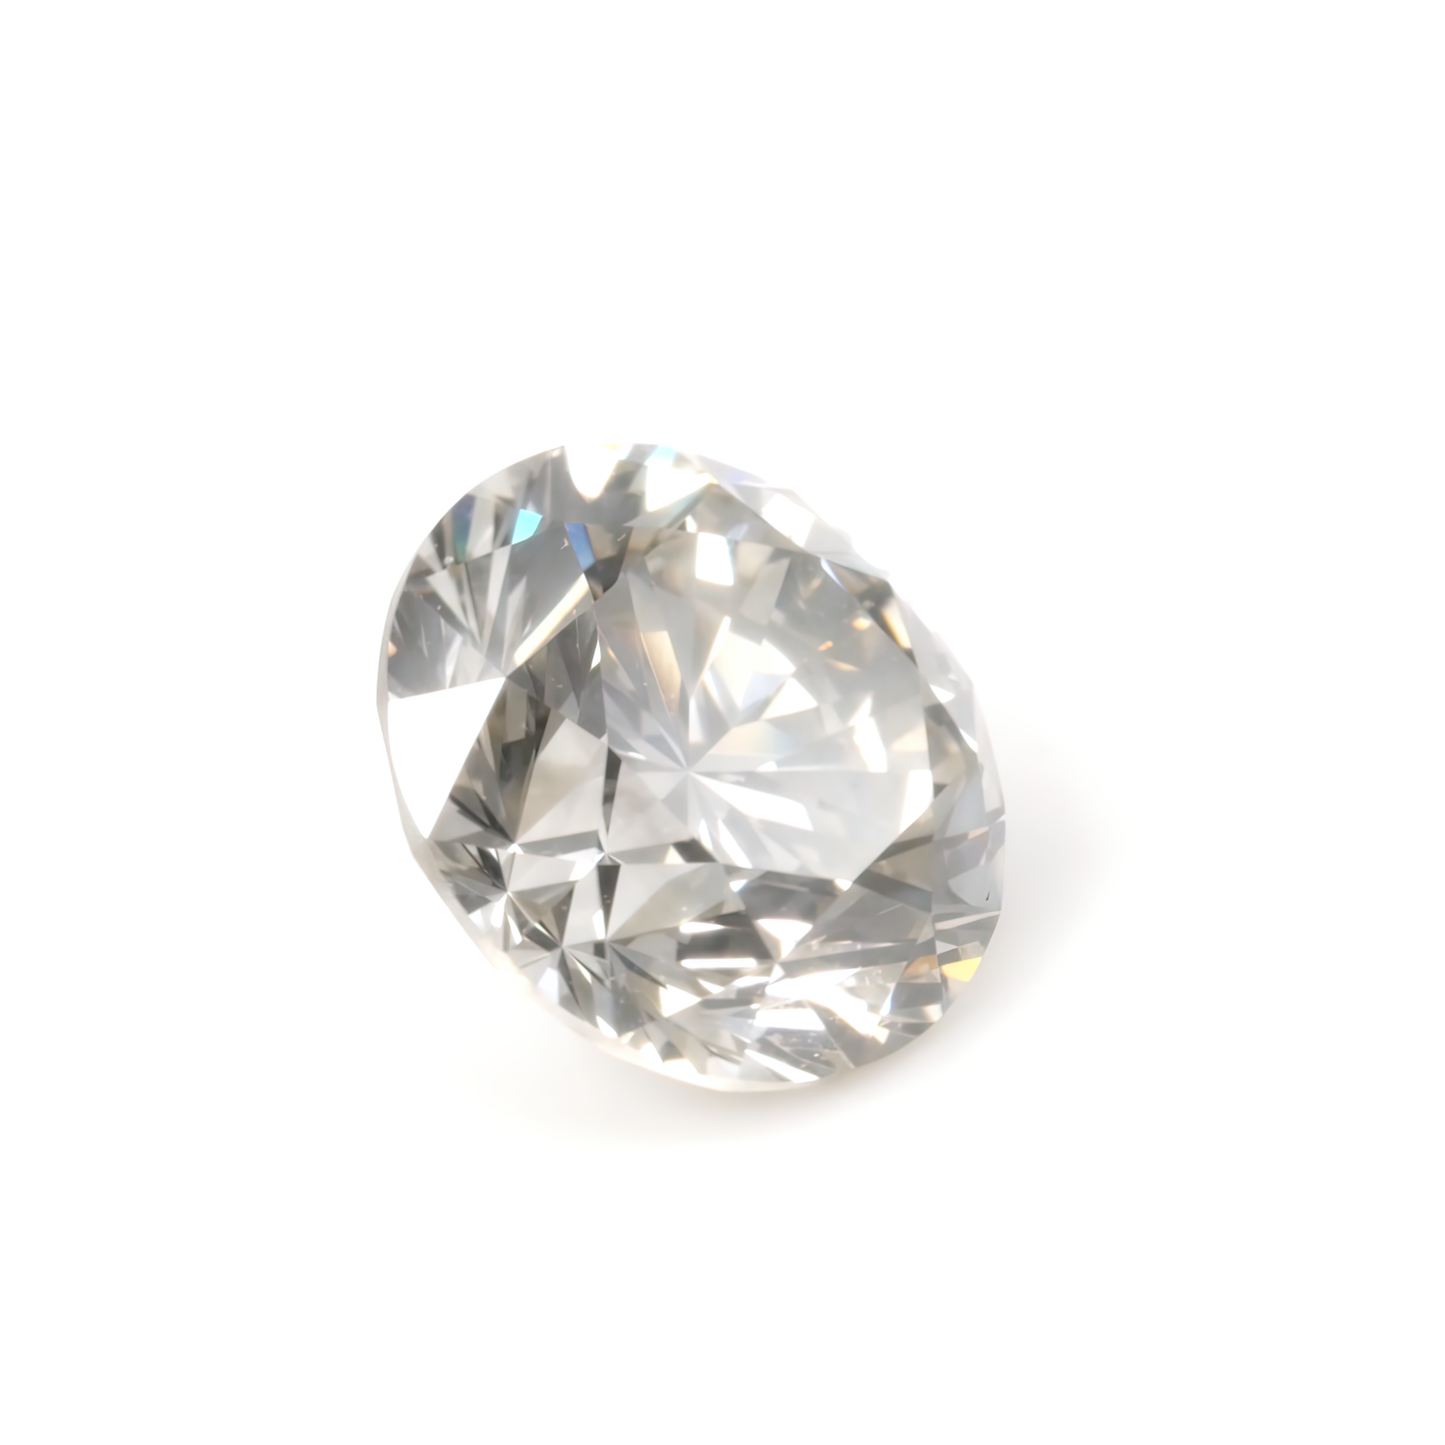 1.53ct White (K), Round Diamond, SI1 - 7.14 - 7.21 x 4.77mm